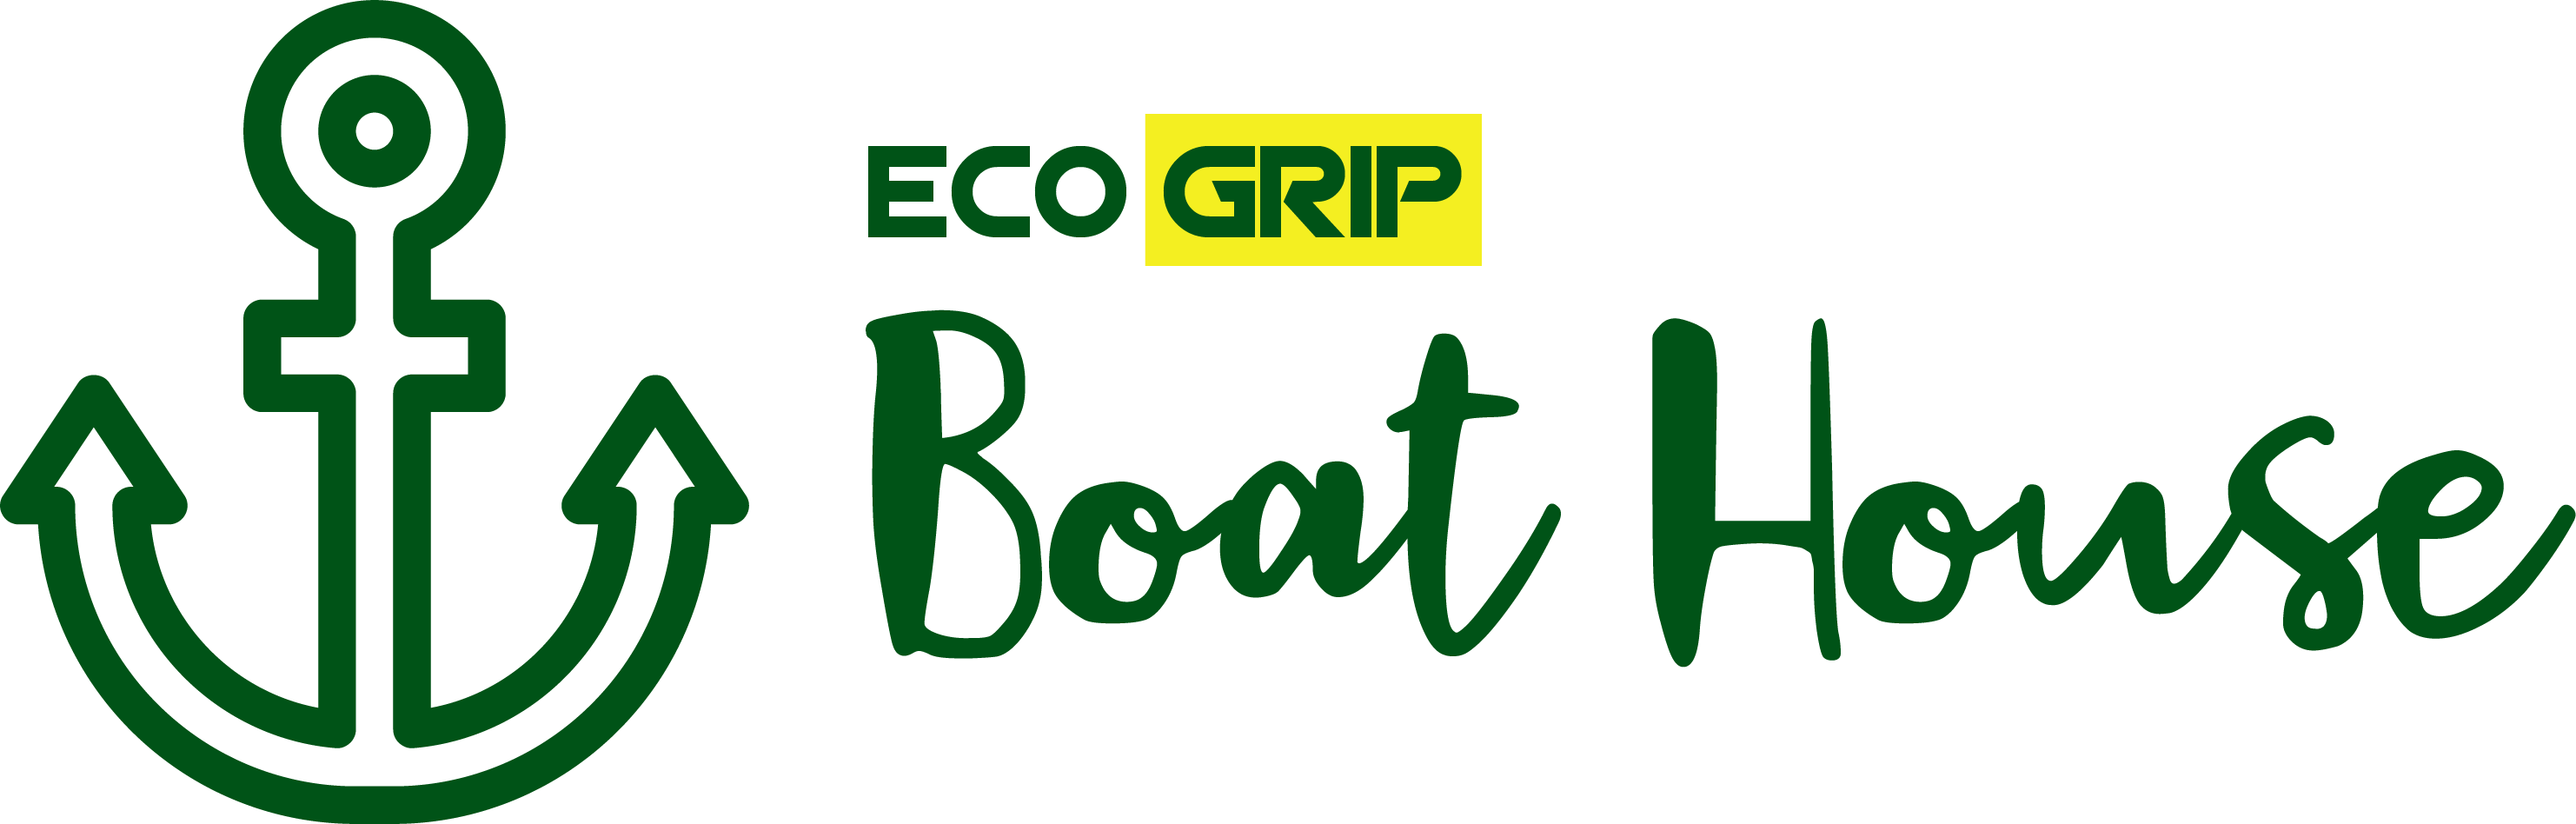 Eco Grip Boat House Logo